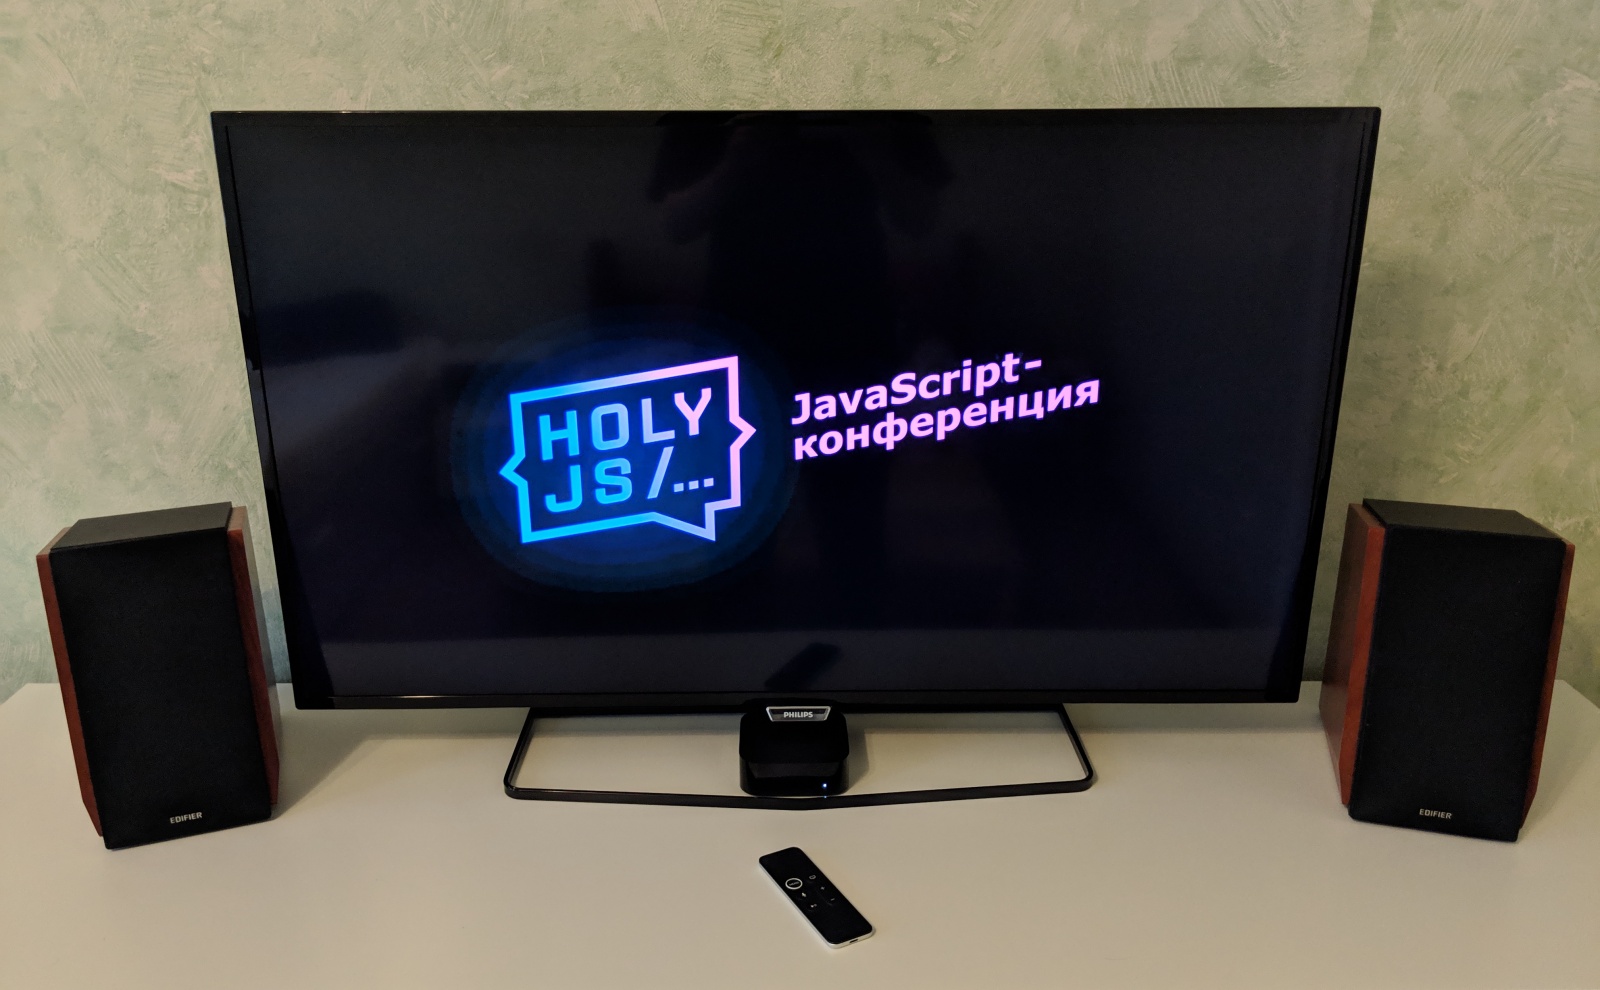 HolyJS 2018 Moscow: бесплатная онлайн-трансляция, вечеринка и научно-технический рэп - 1